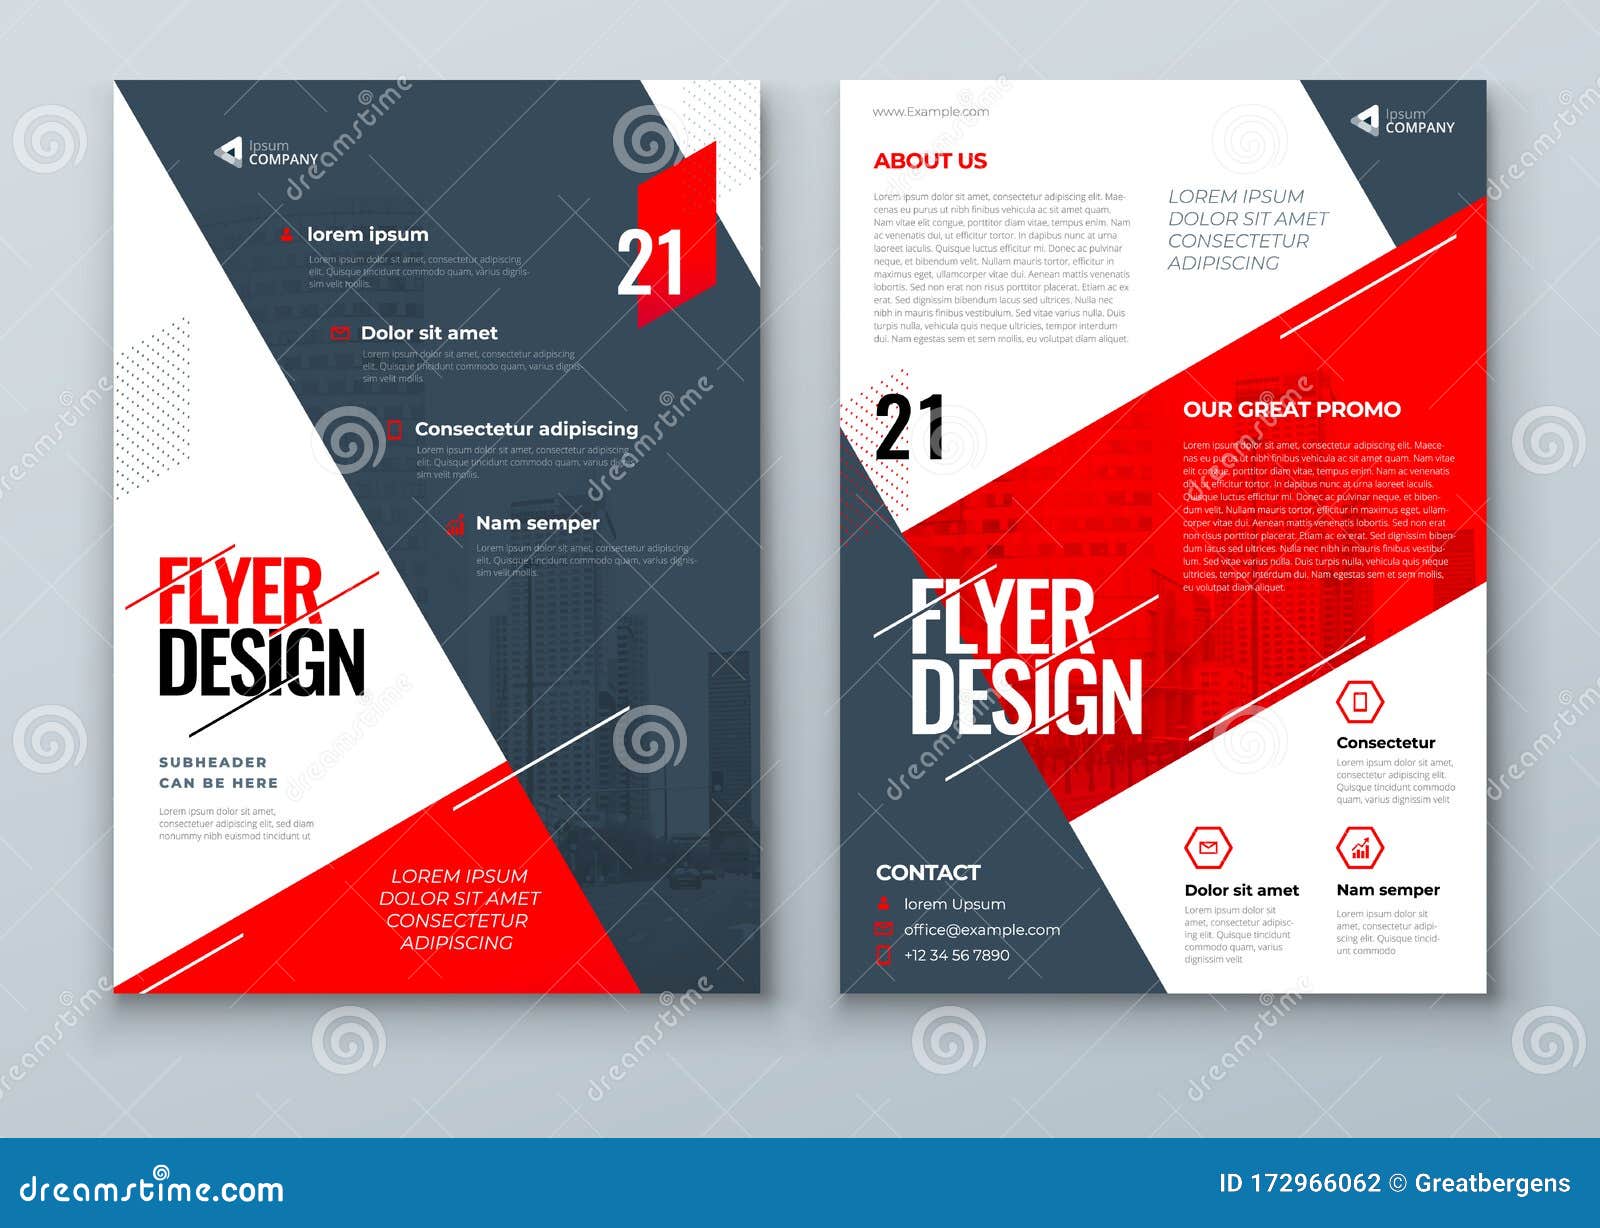 Flyer Design Red Modern Flyer Background Design Template Layout For Flyer Concept With Dynamic Line Shapes Vector Stock Vector Illustration Of Mockup Business 172966062